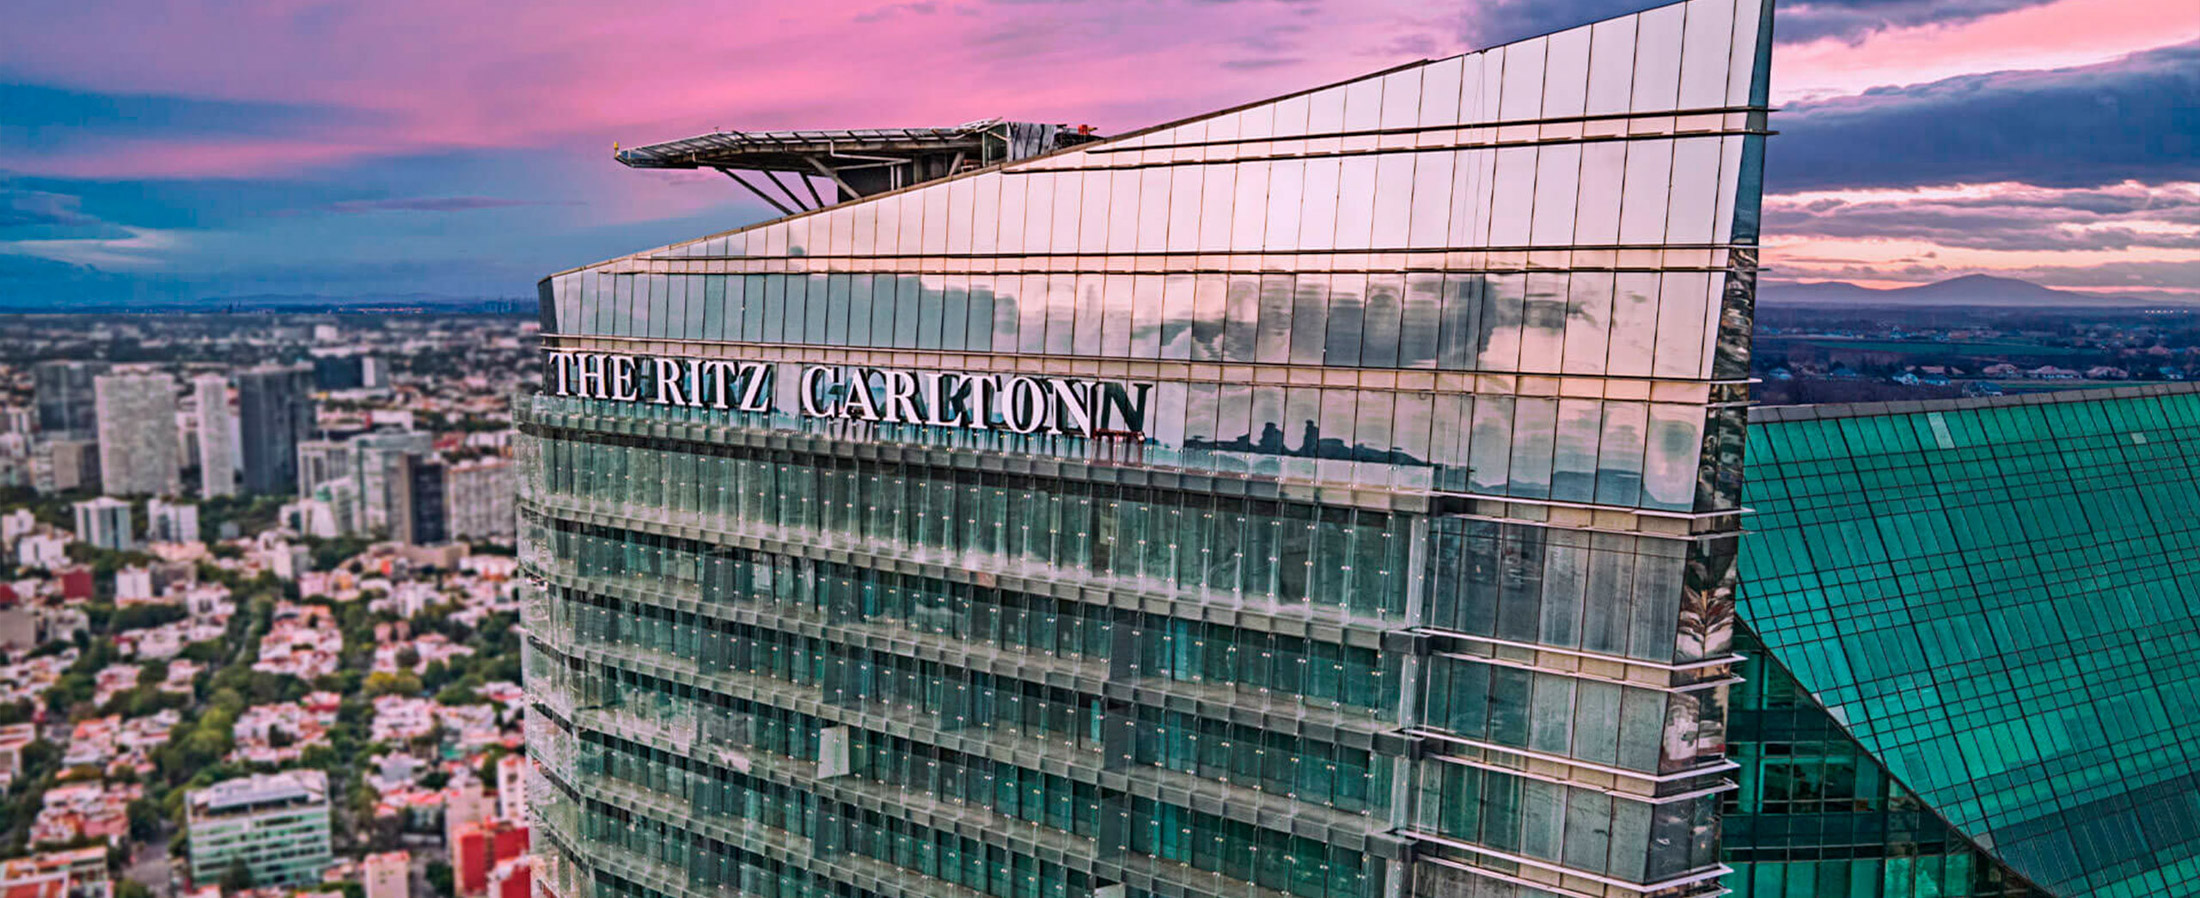 The Ritz-Carlton, Mexico City Hotel – Mexico City, Mexico – Exterior Tower View Sunset